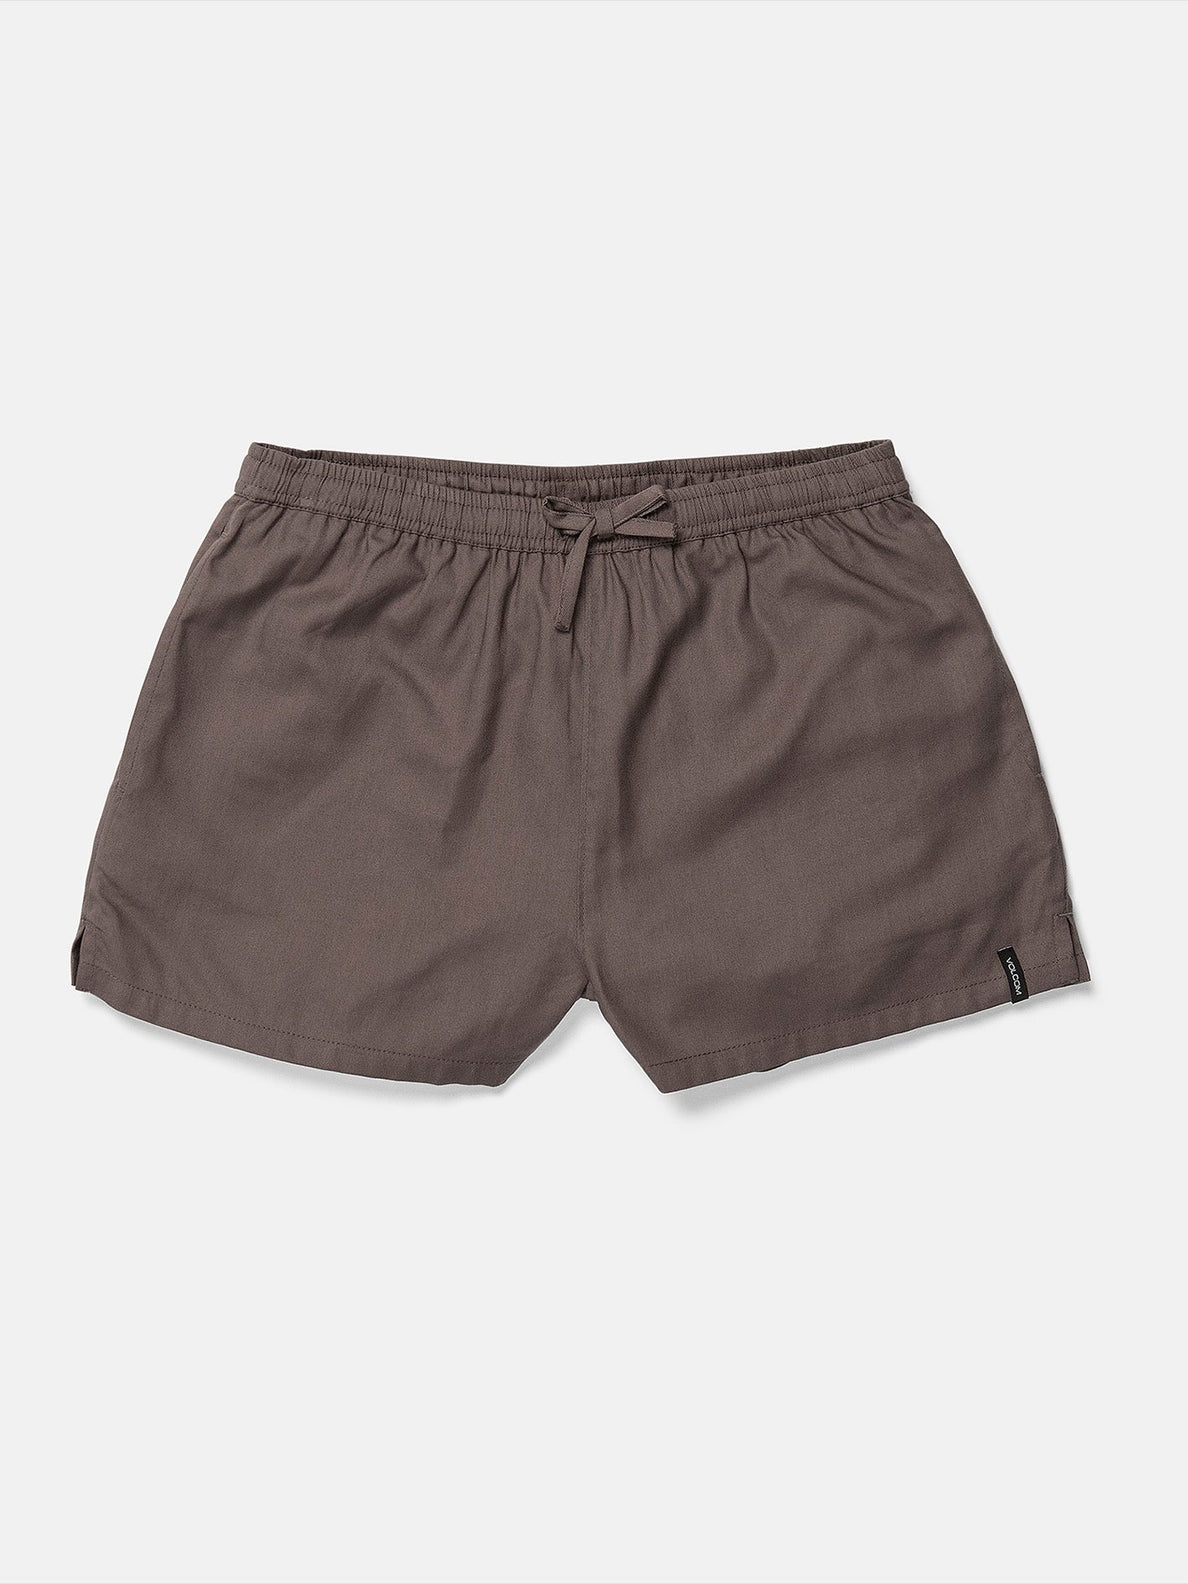 Stone Def Shorts - Slate Grey